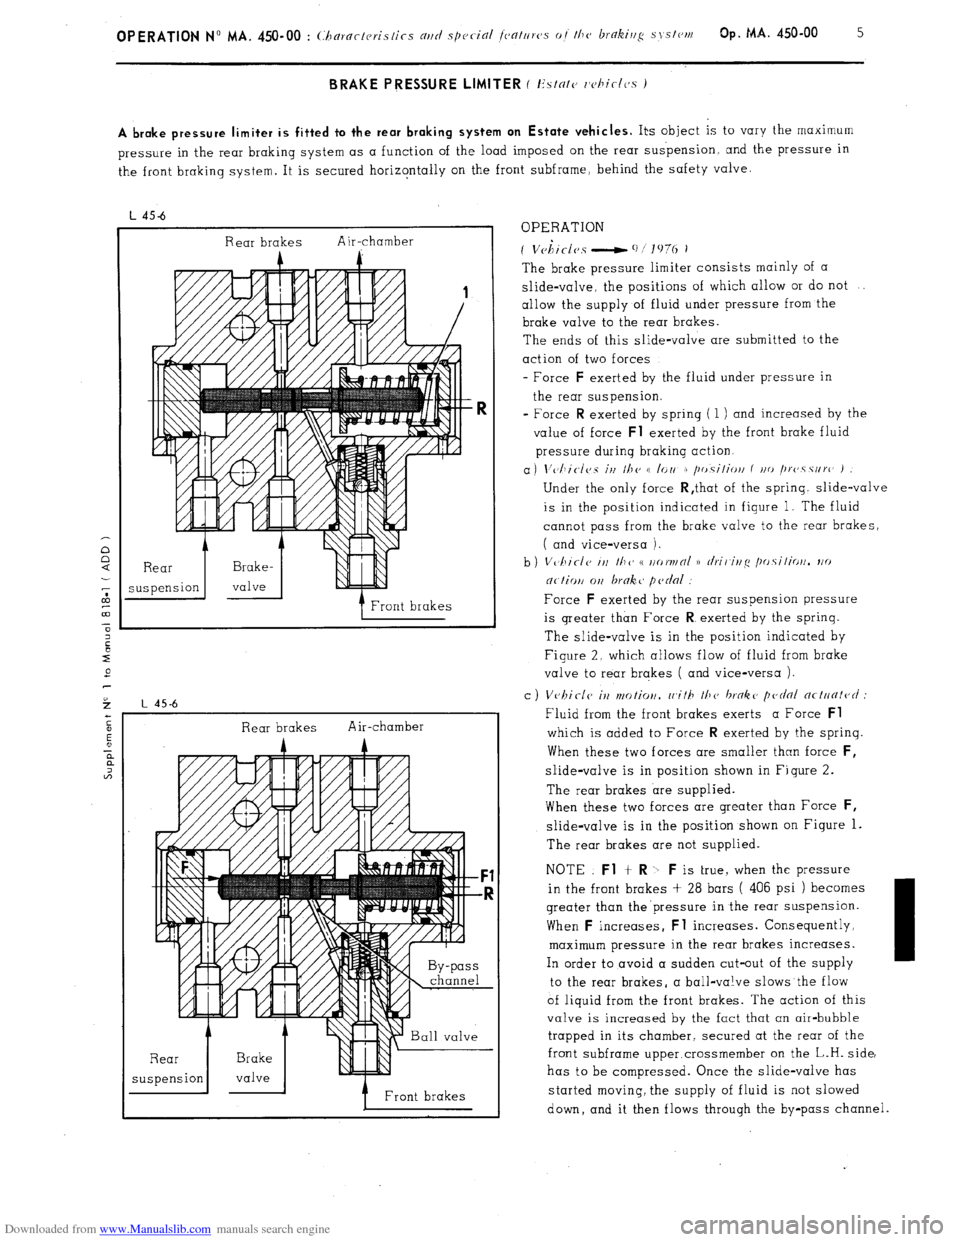 Citroen CX 1985 1.G User Guide Downloaded from www.Manualslib.com manuals search engine OPERATION No MA. 450-00 : Ch nrnclcrislics ortd sp~~c-i~l (c~c~trlrc>s 01 the hokiug S SI~IN Op. MA. 450.00 5 
A brake pressure limiter is fitt